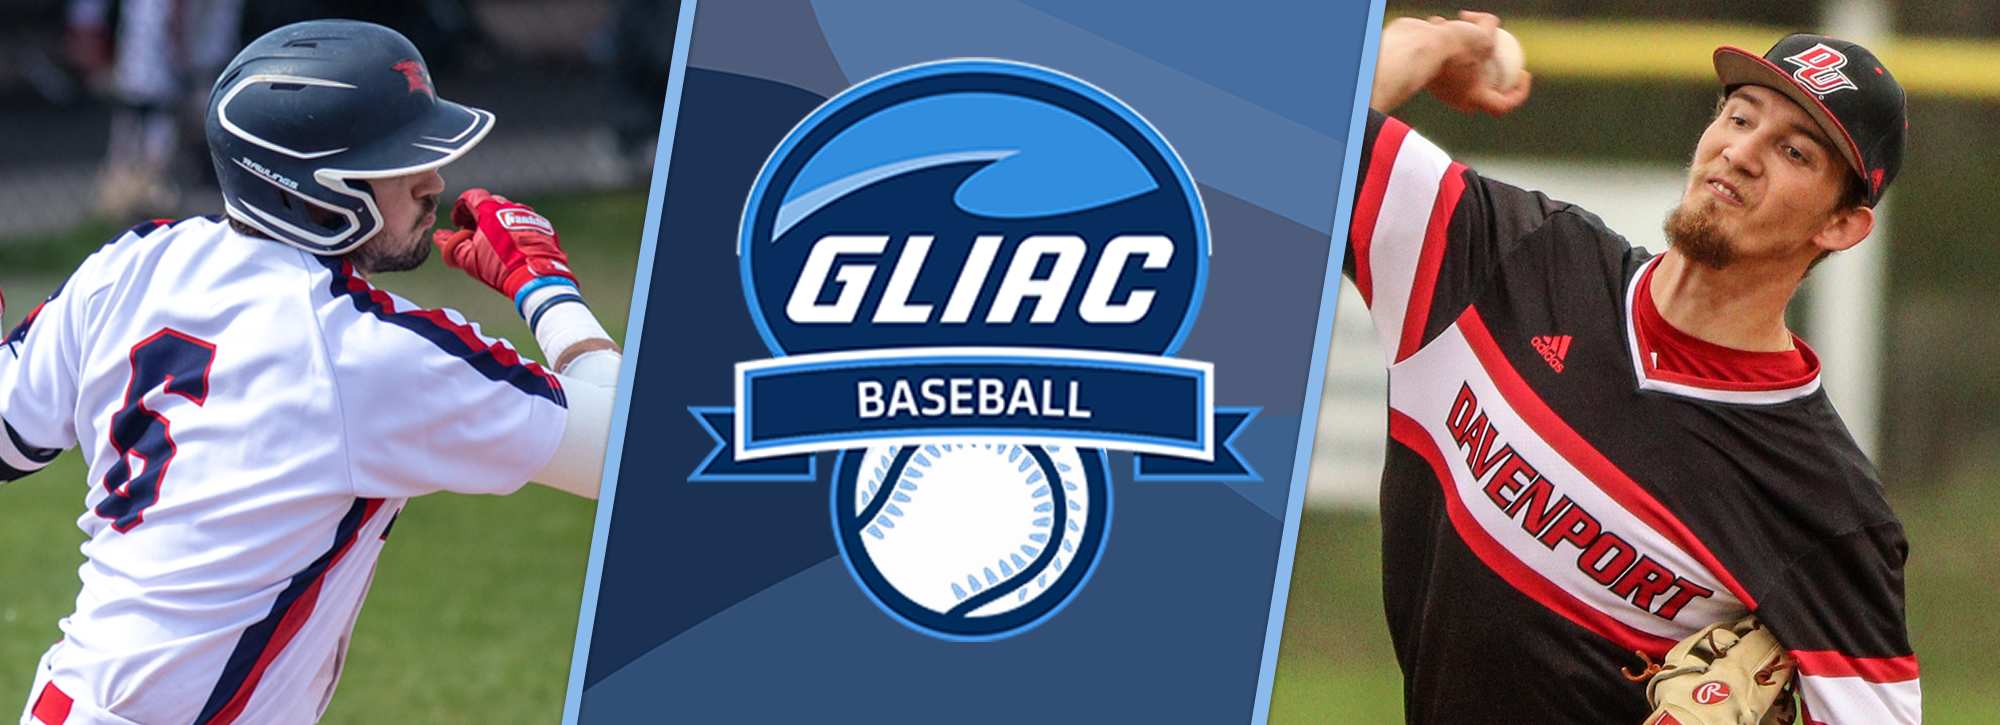 SVSU's Money and DU's Edington receive weekly GLIAC baseball honors